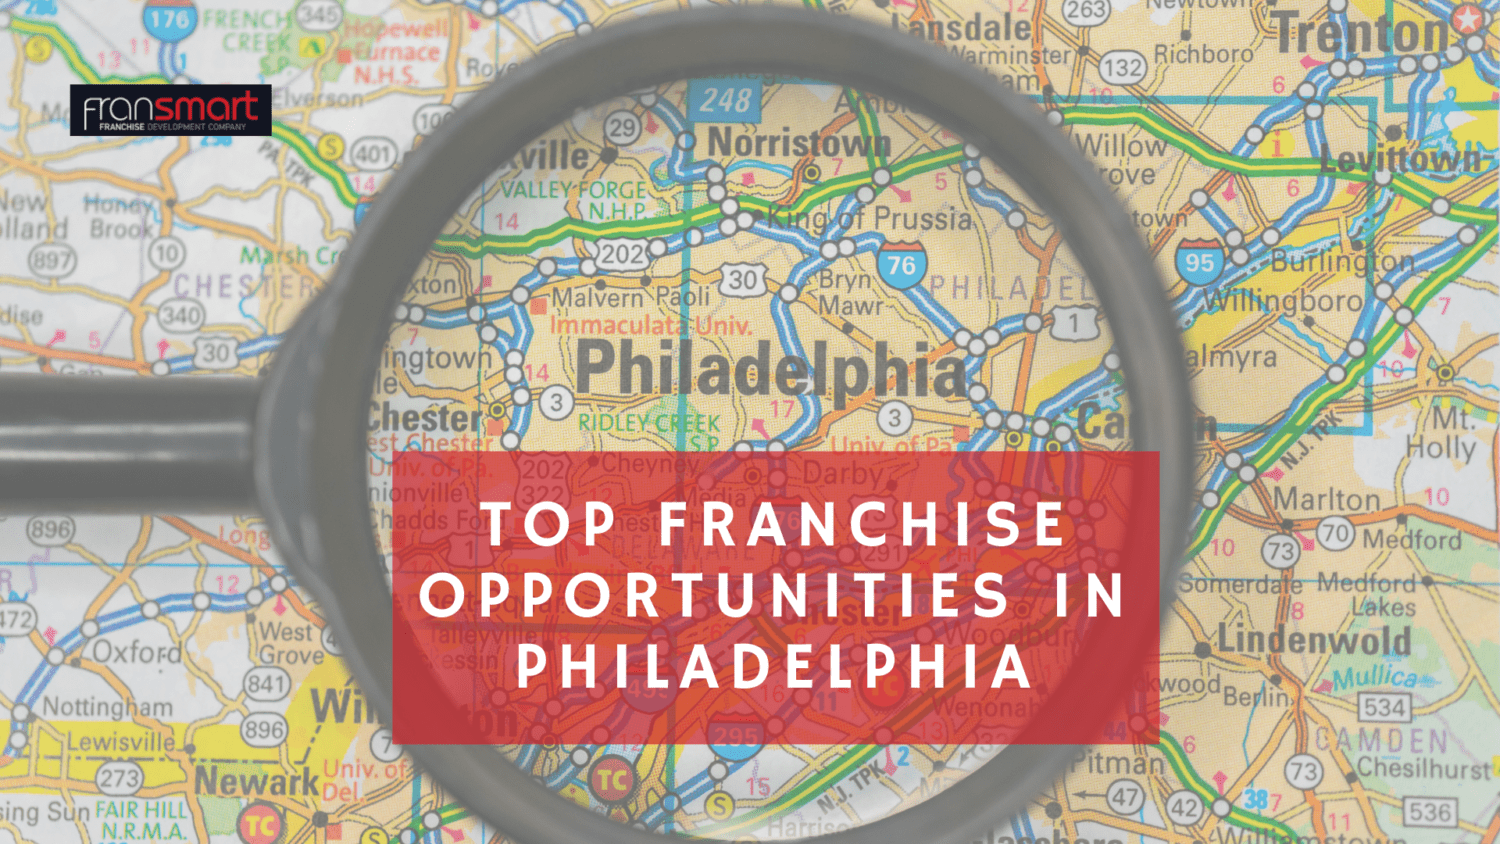 Top 5 Franchise Opportunities in Philadelphia